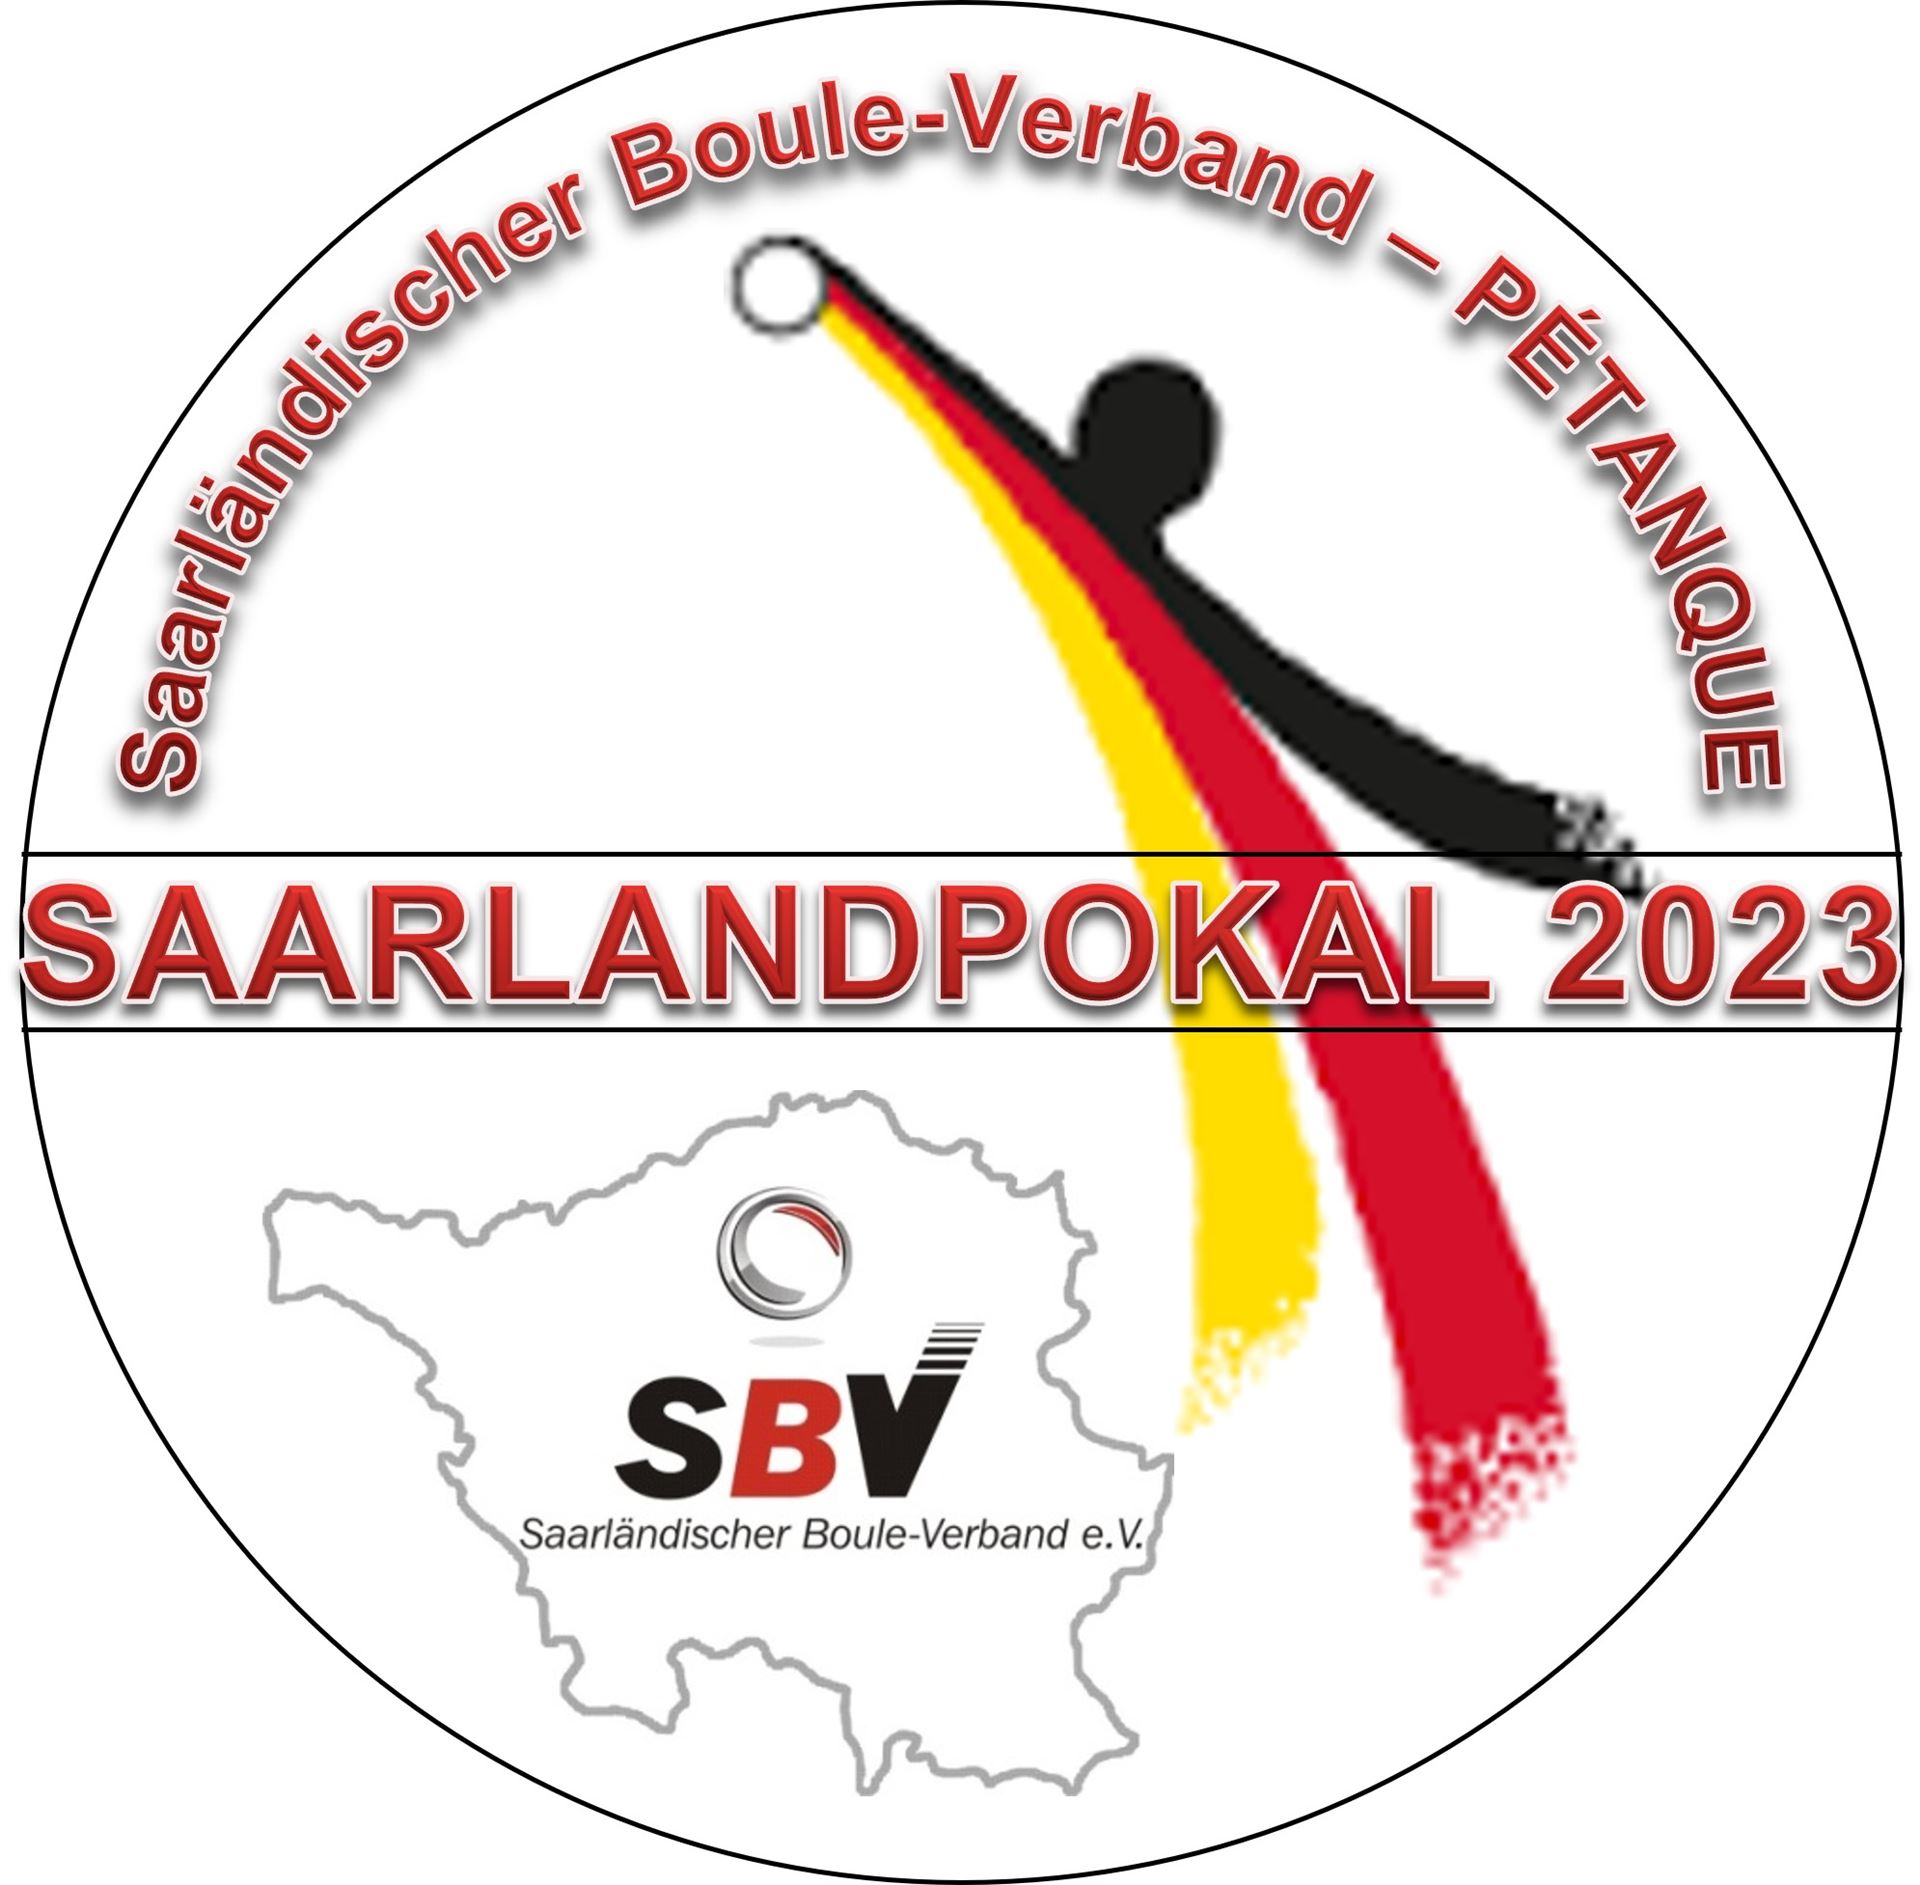 Saarlandpokal 2023